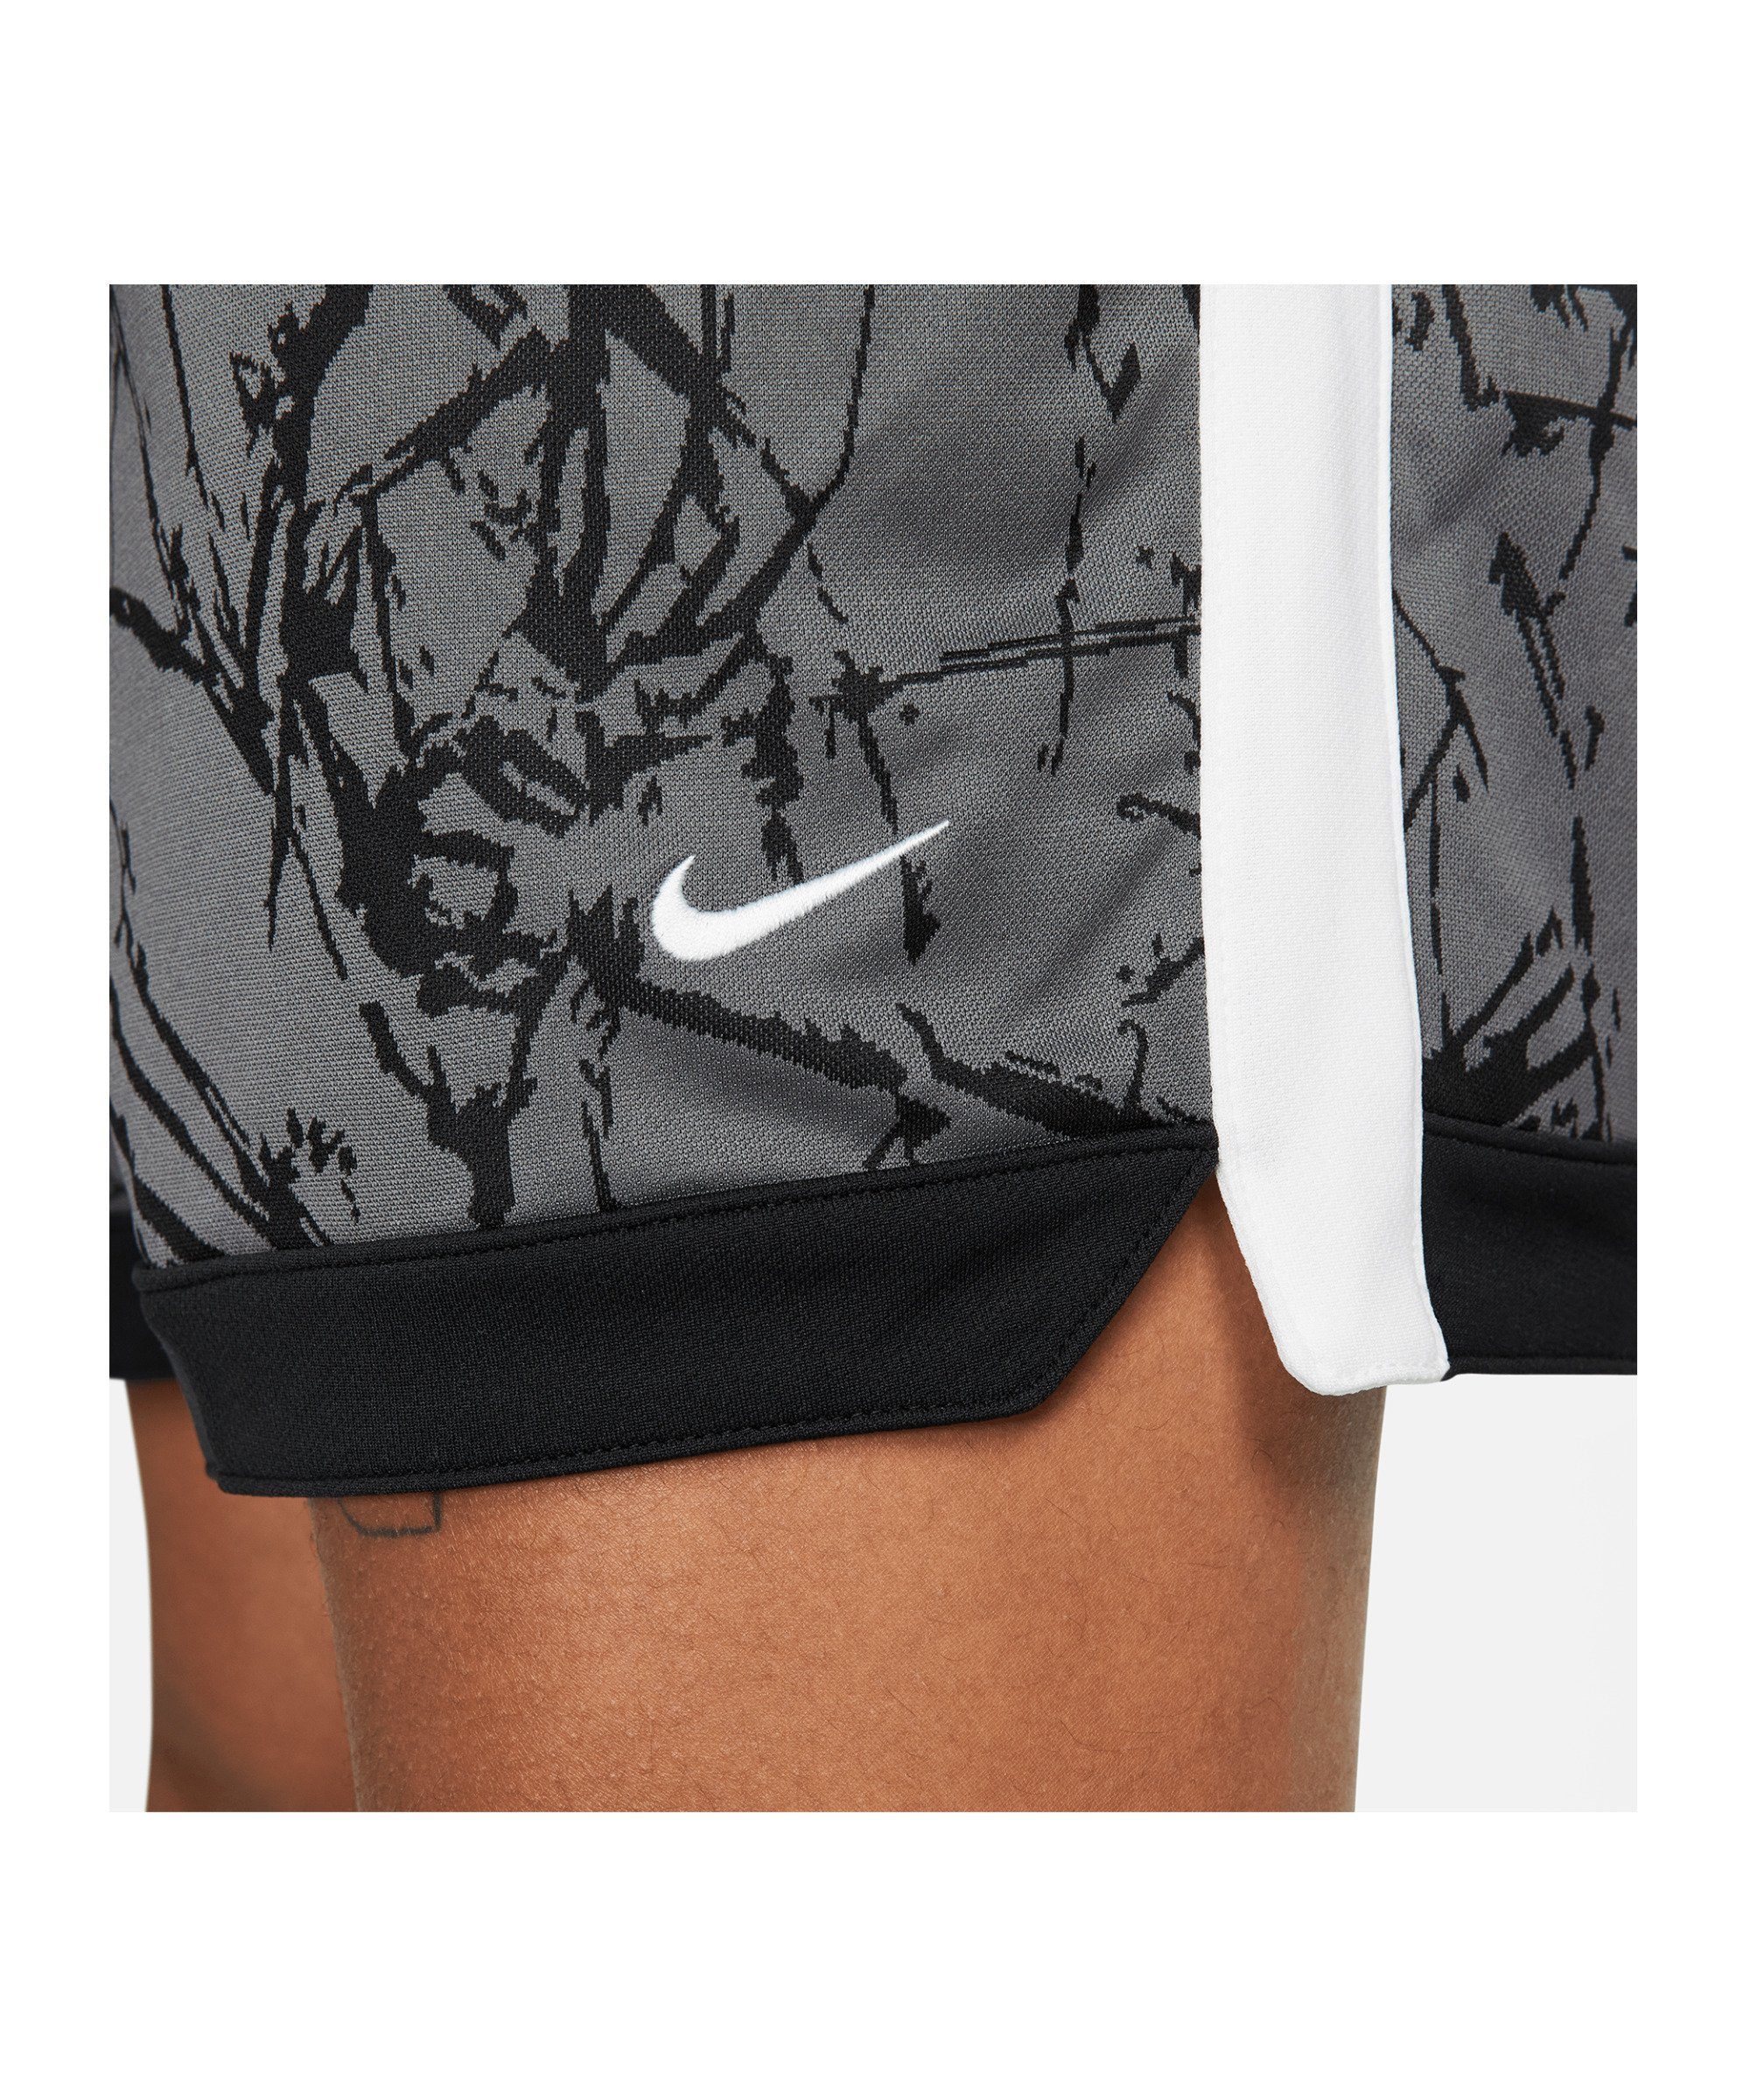 Nike Sportswear grauschwarzweiss Short 5inch Jogginghose F.C